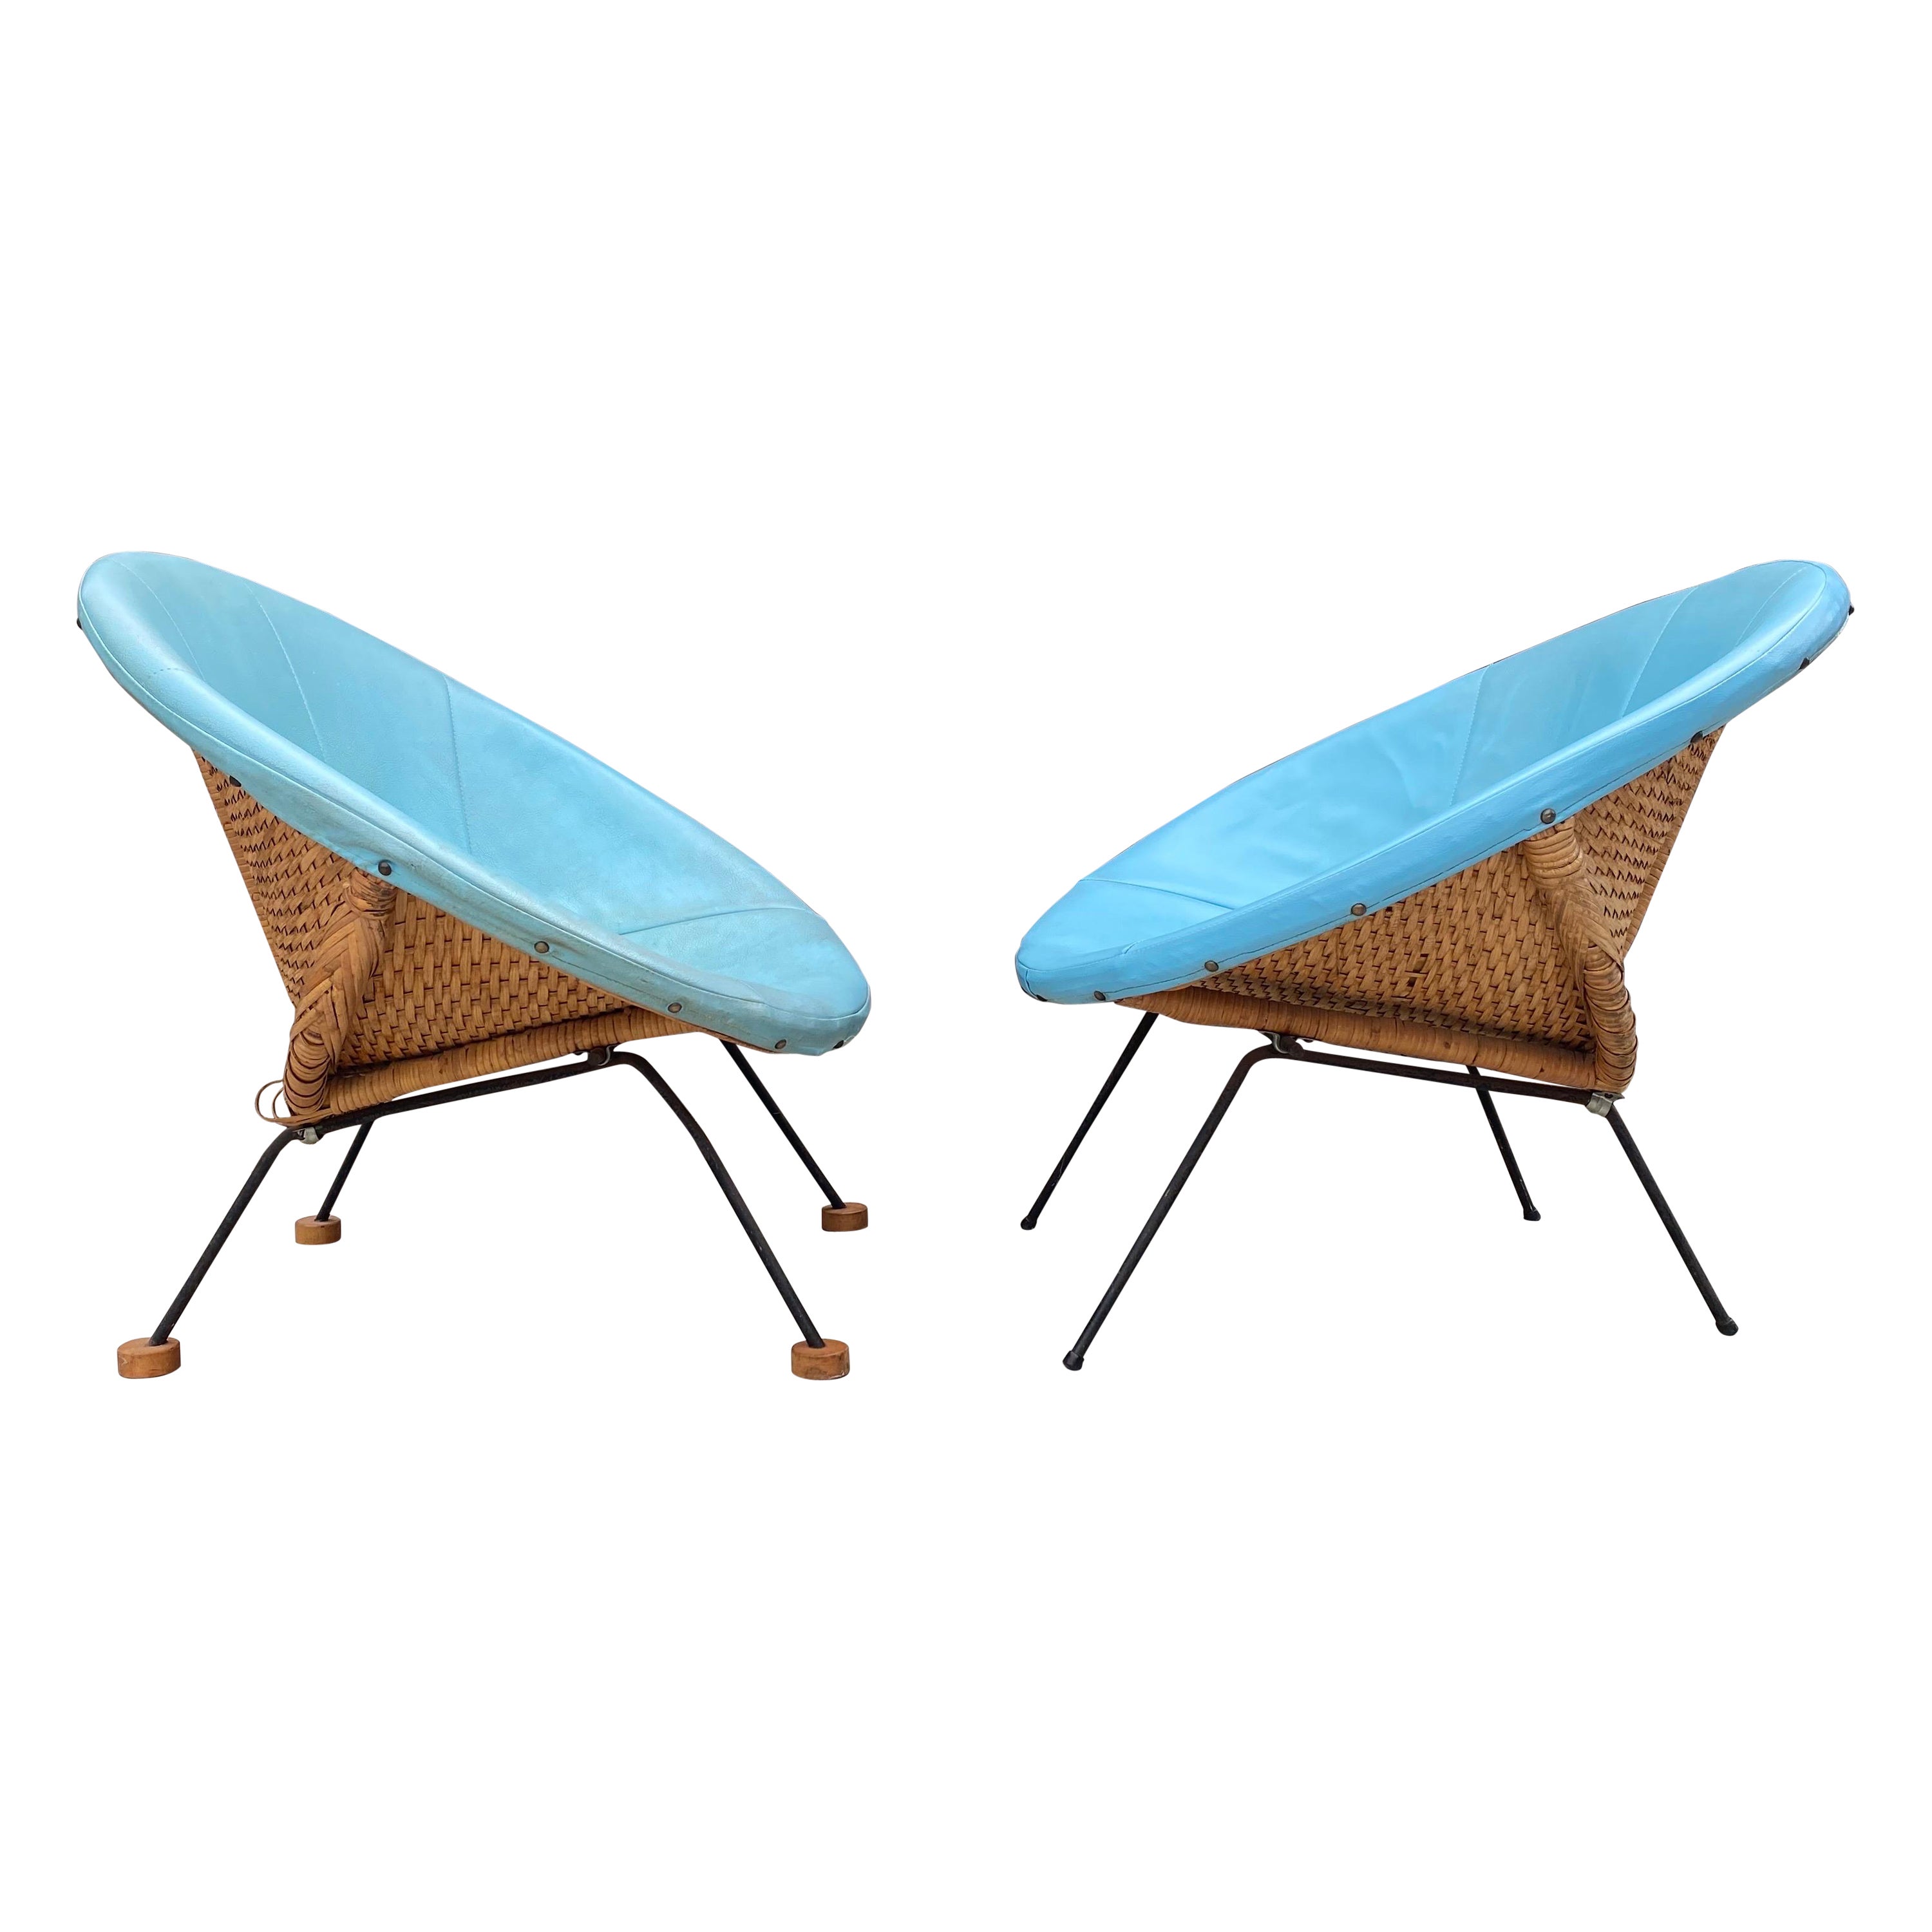 Mid-Century Modern Boho Chic Turquoise Rattan Scoop Chairs, ein Paar